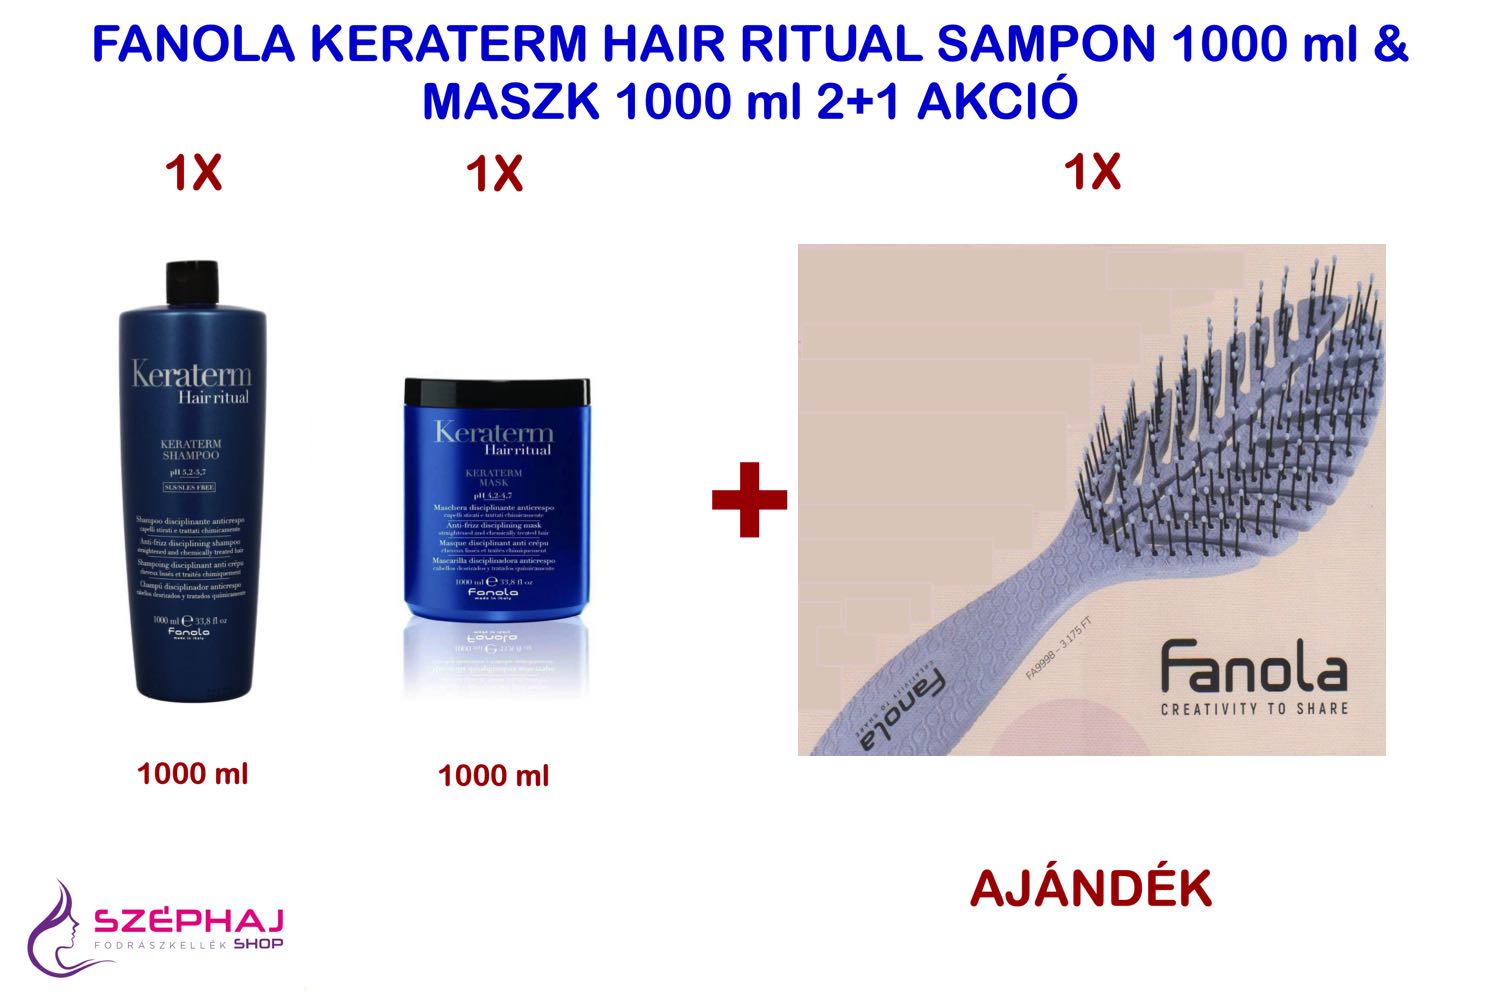 FANOLA Keraterm Hair Ritual Shampoo 1000 ml & Mask 1000 ml 2+1 AKCIÓ